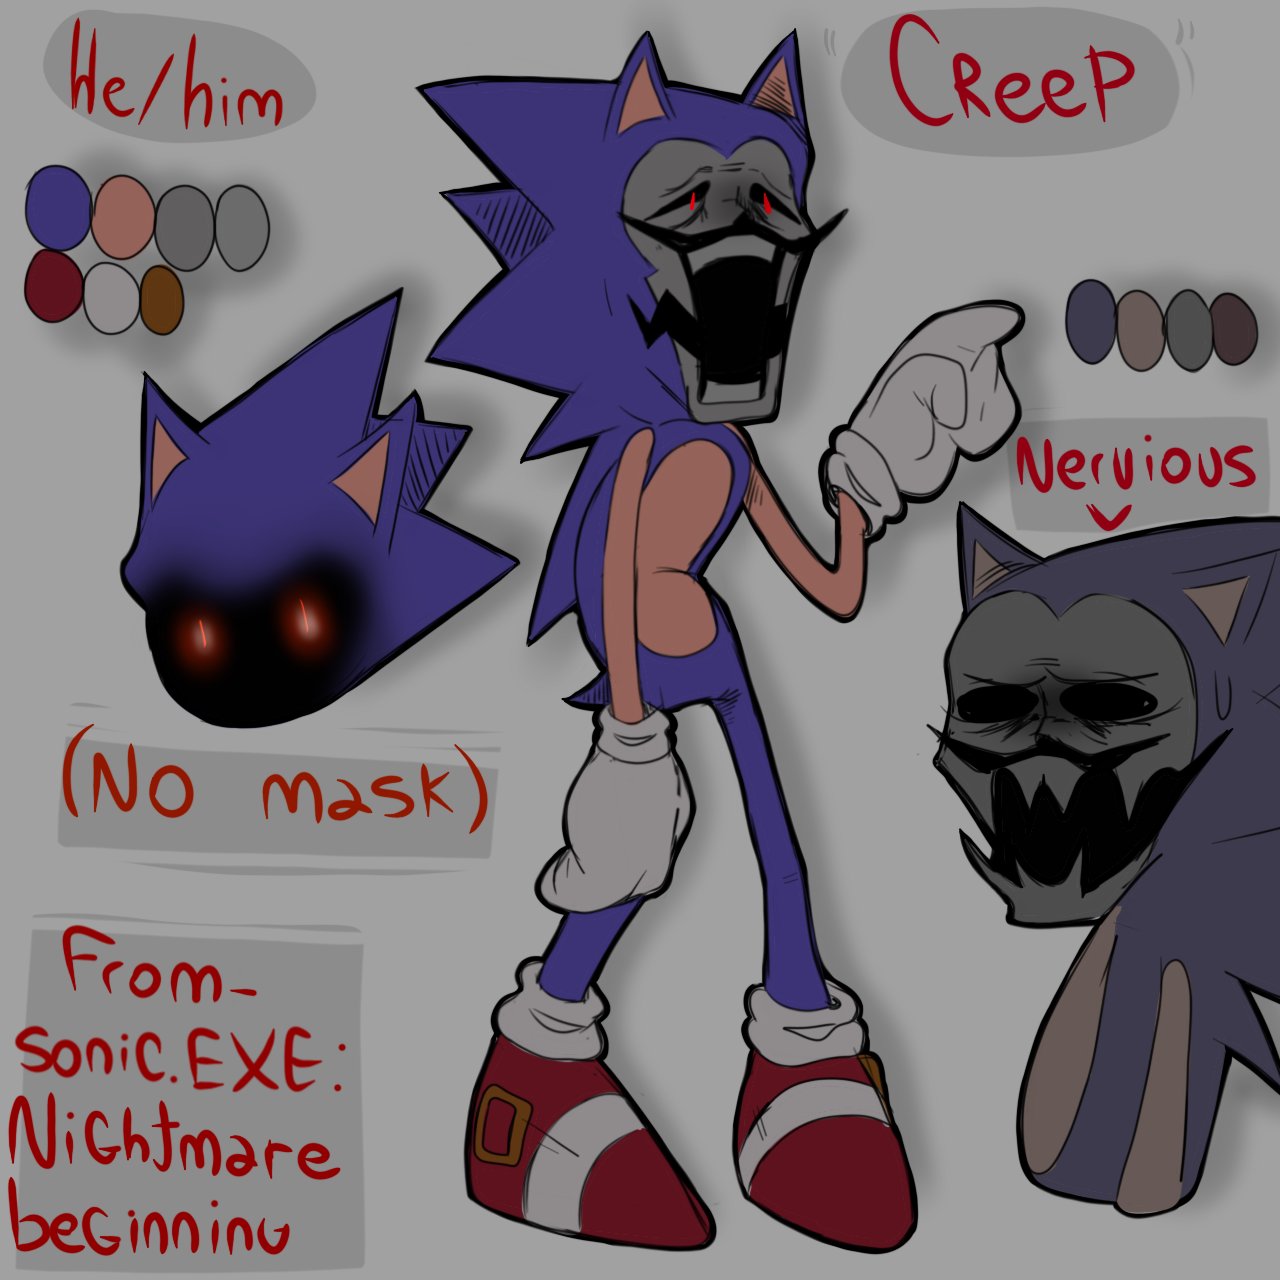 A dead user 💀 on X: Majin sonic/creep Sonic.exe: nightmare